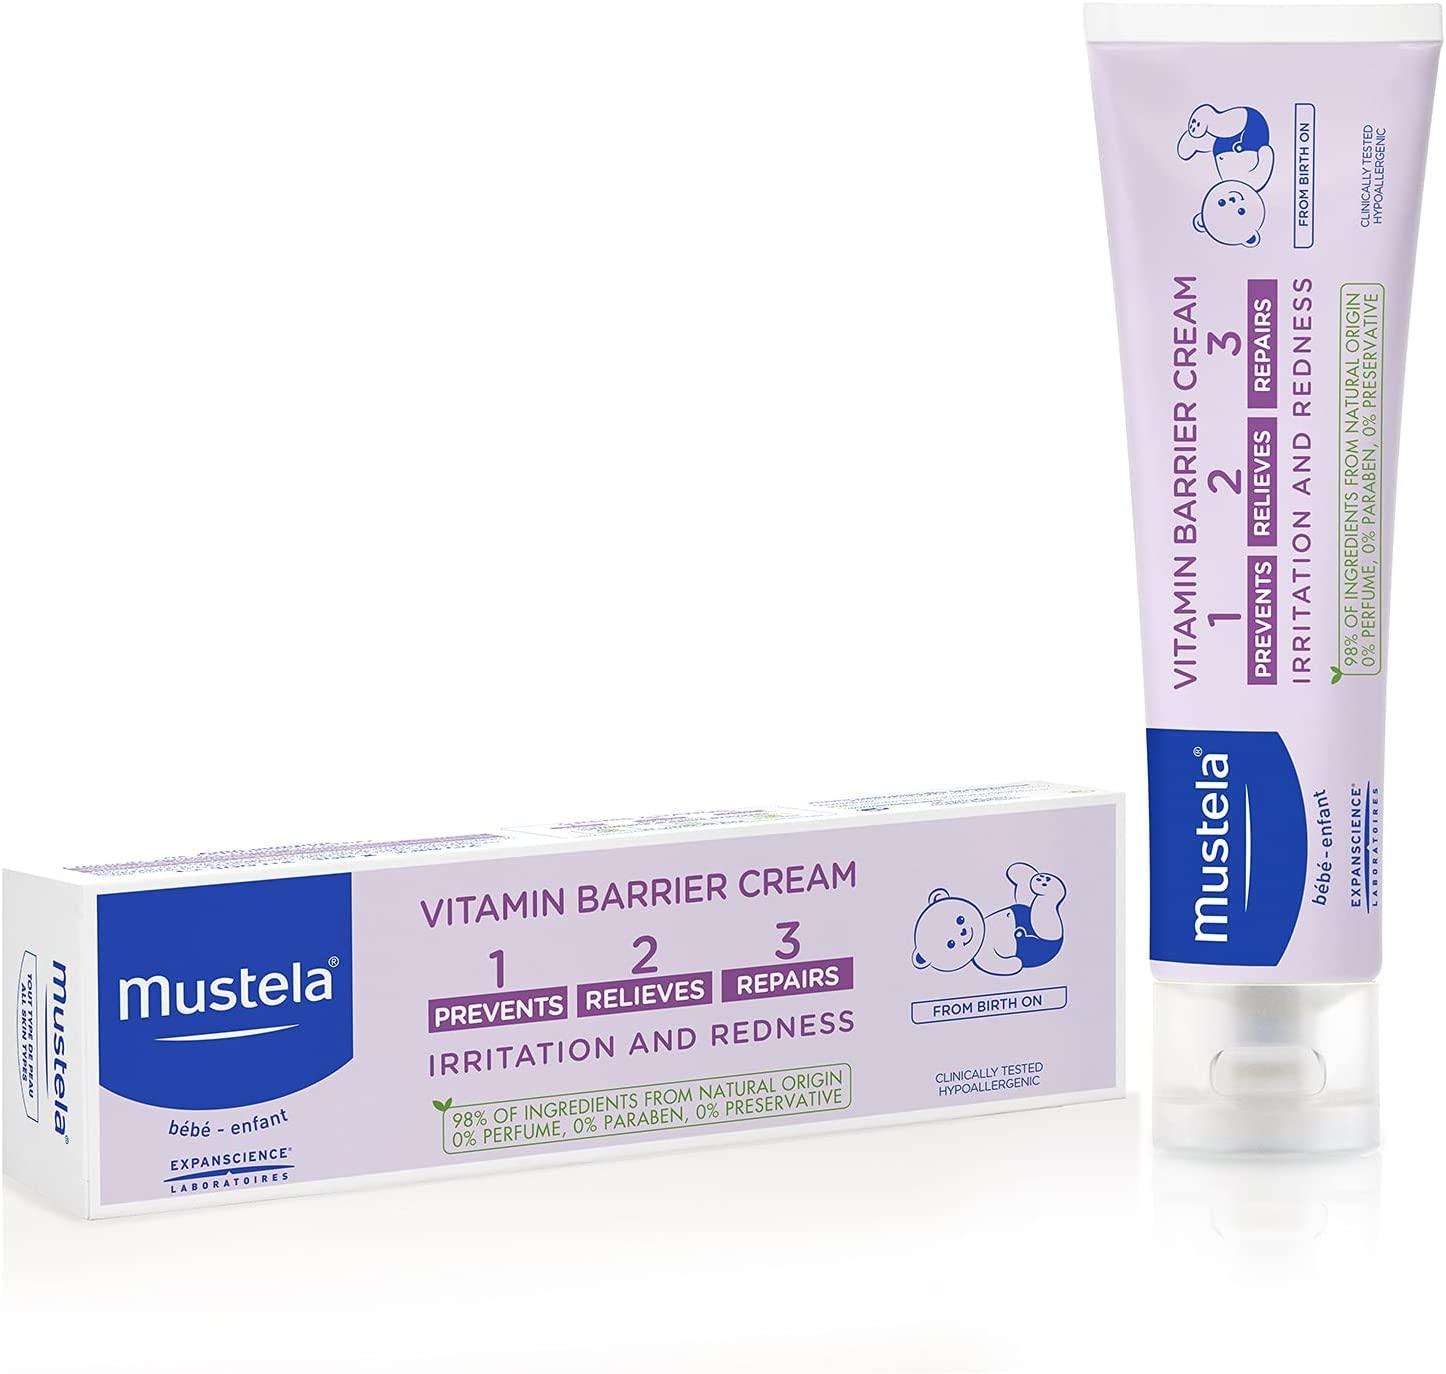 Mostela Vitamin Barrier Cream - Wellness Shoppee